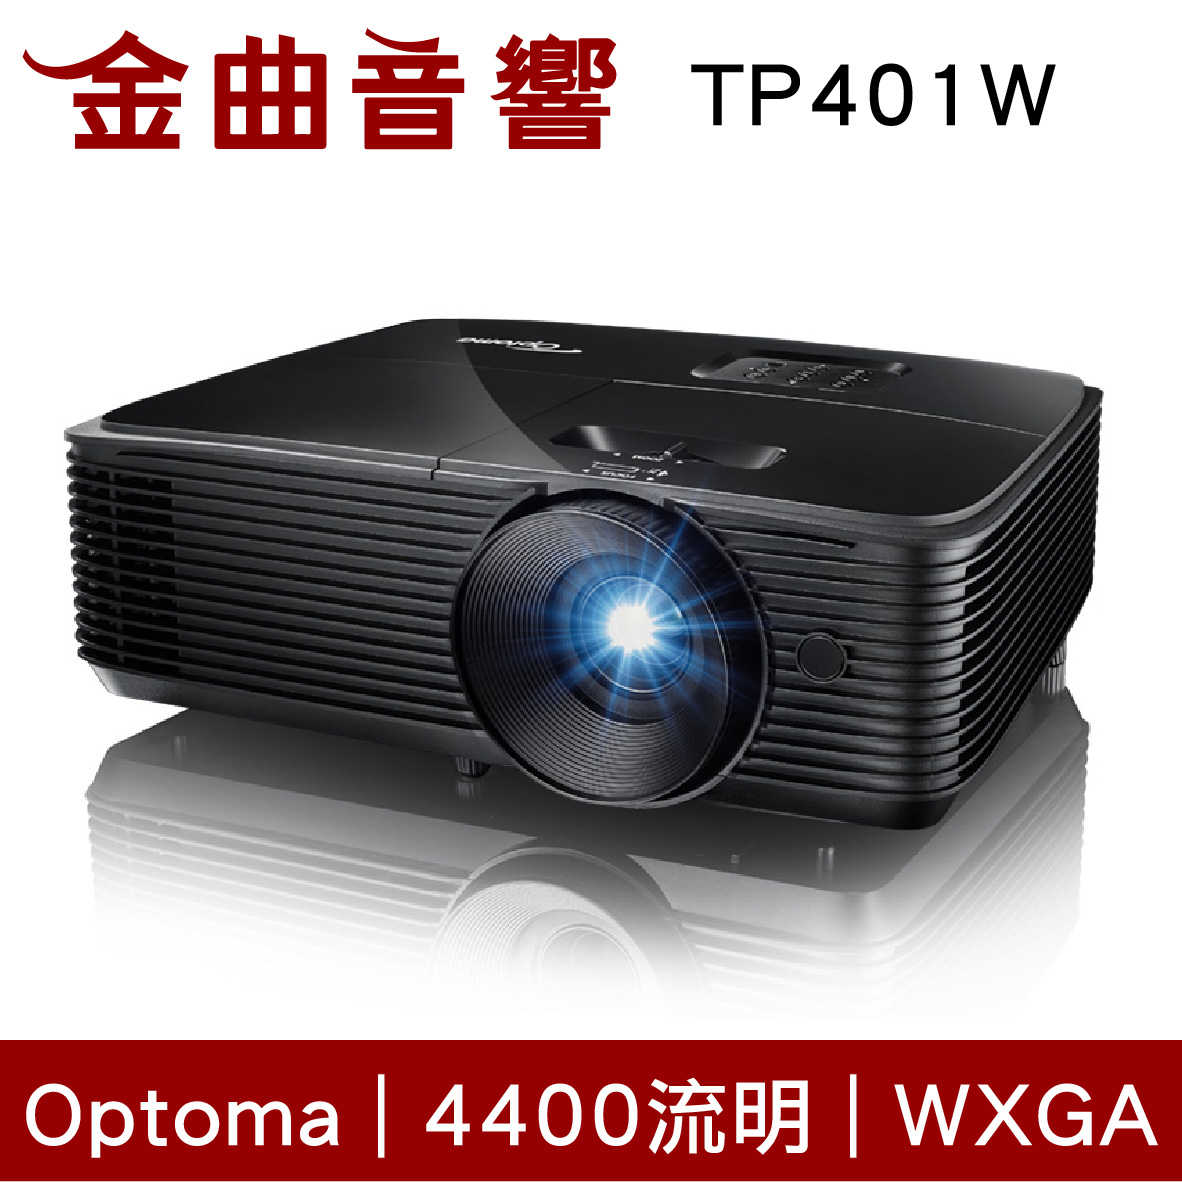 Optoma 奧圖碼 TP401W 商用 會議 教學 4400流明 WXGA 多功能 投影機 | 金曲音響